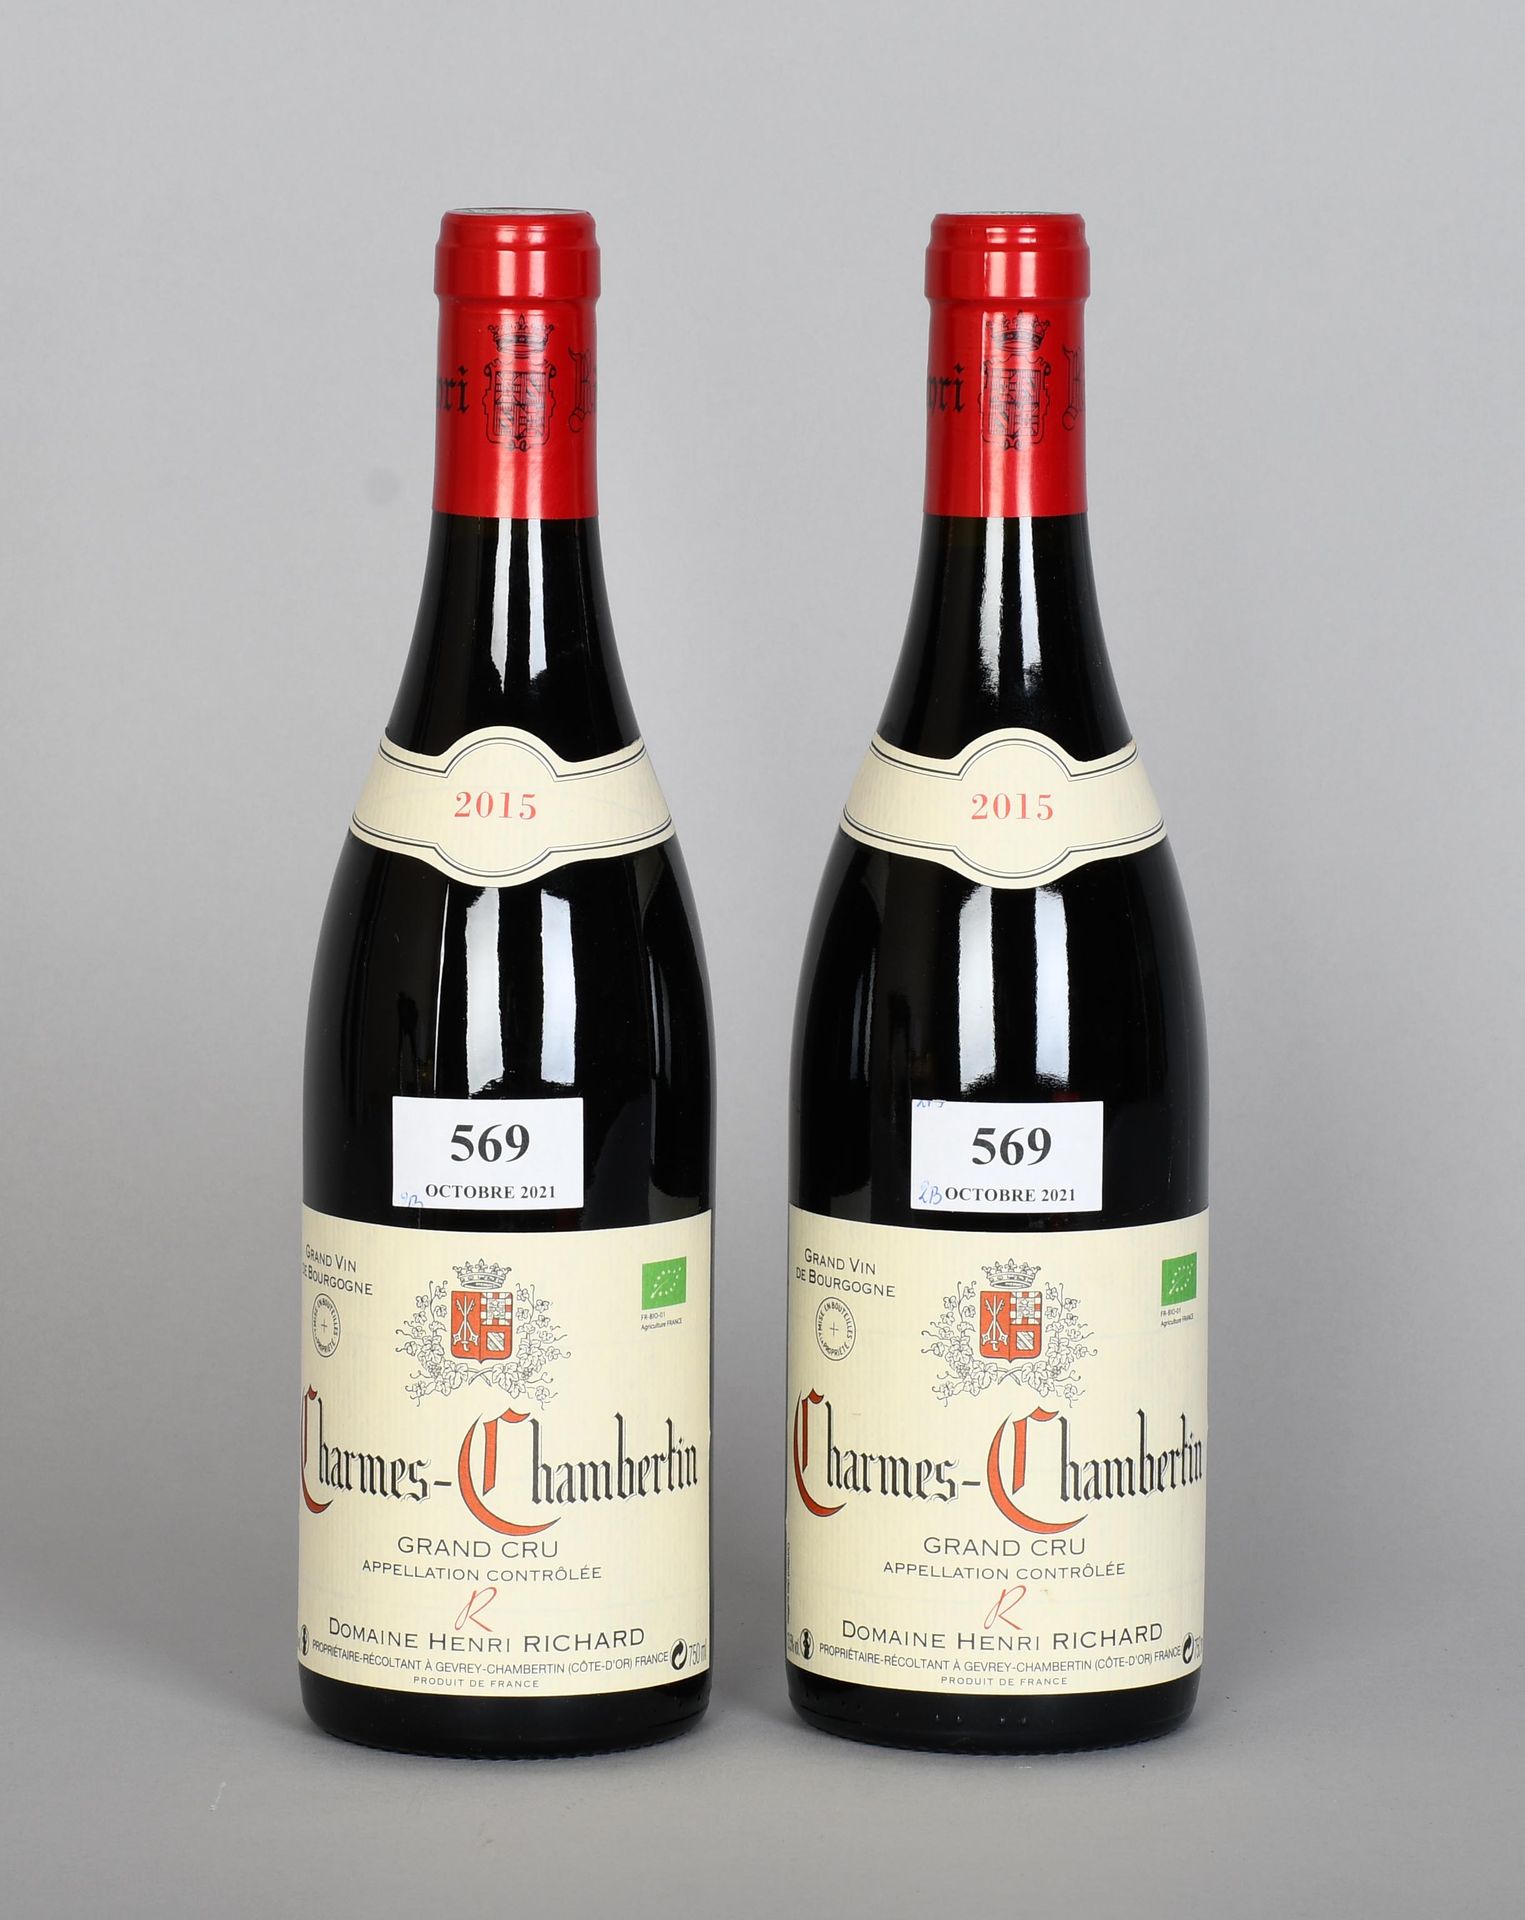 Null Charmes-Chambertin 2015 - Mise propriété - Due bottiglie di vino

Grand cru&hellip;